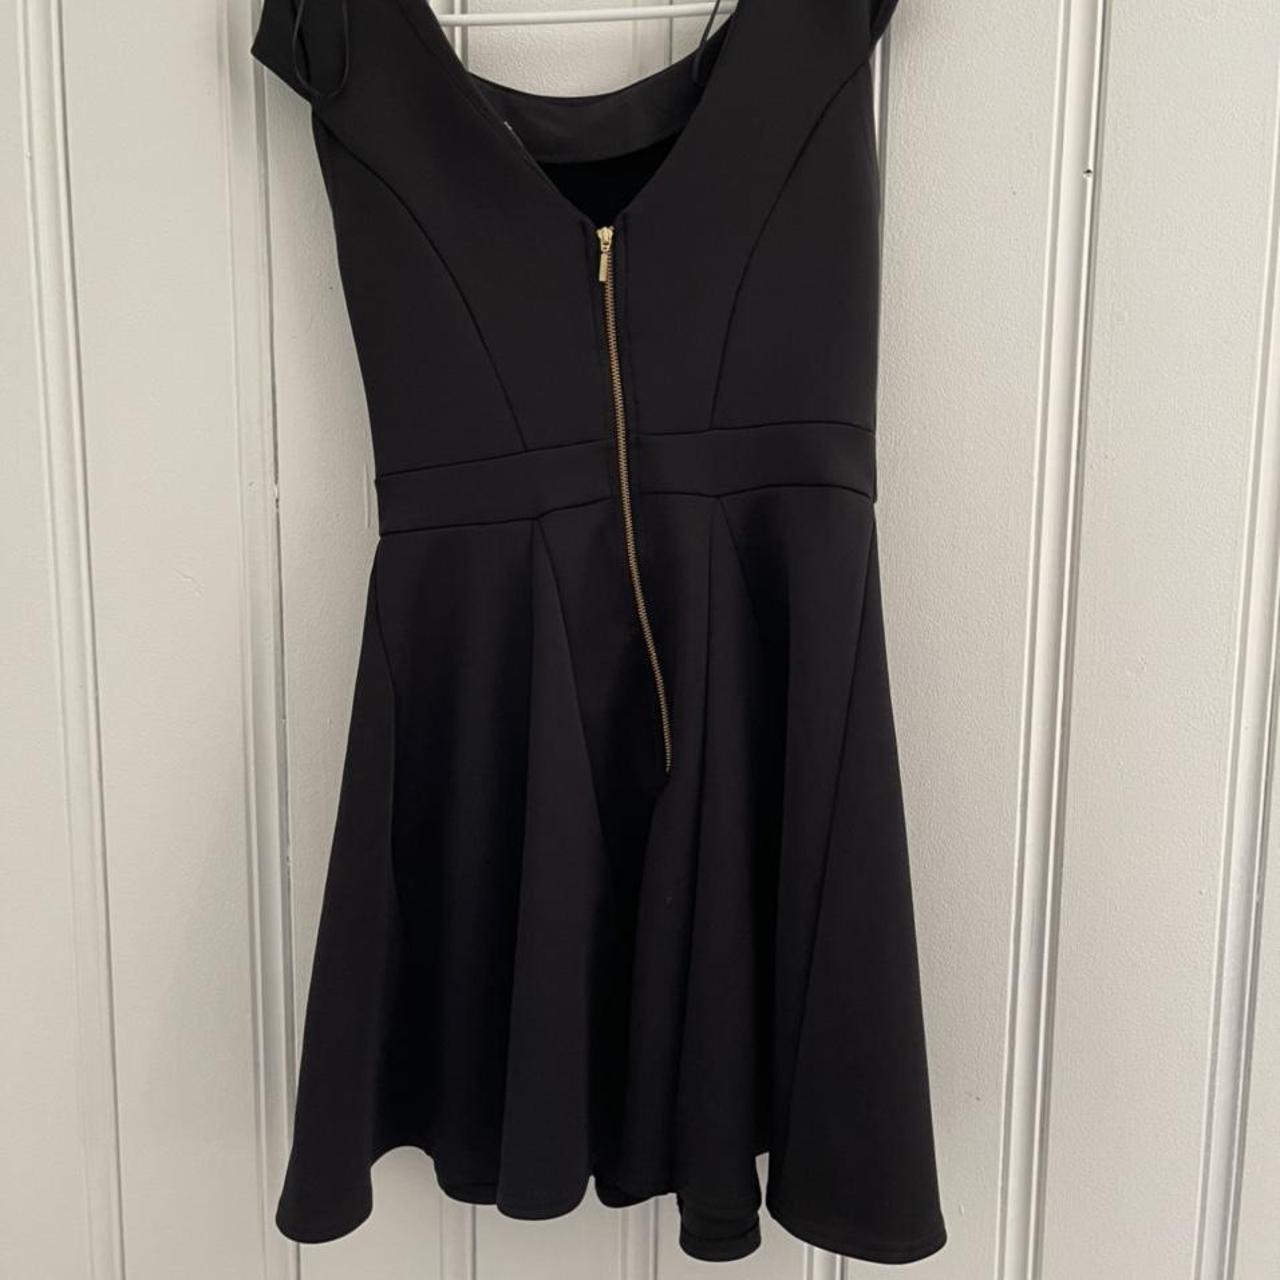 Closet London Women's Black Dress (3)